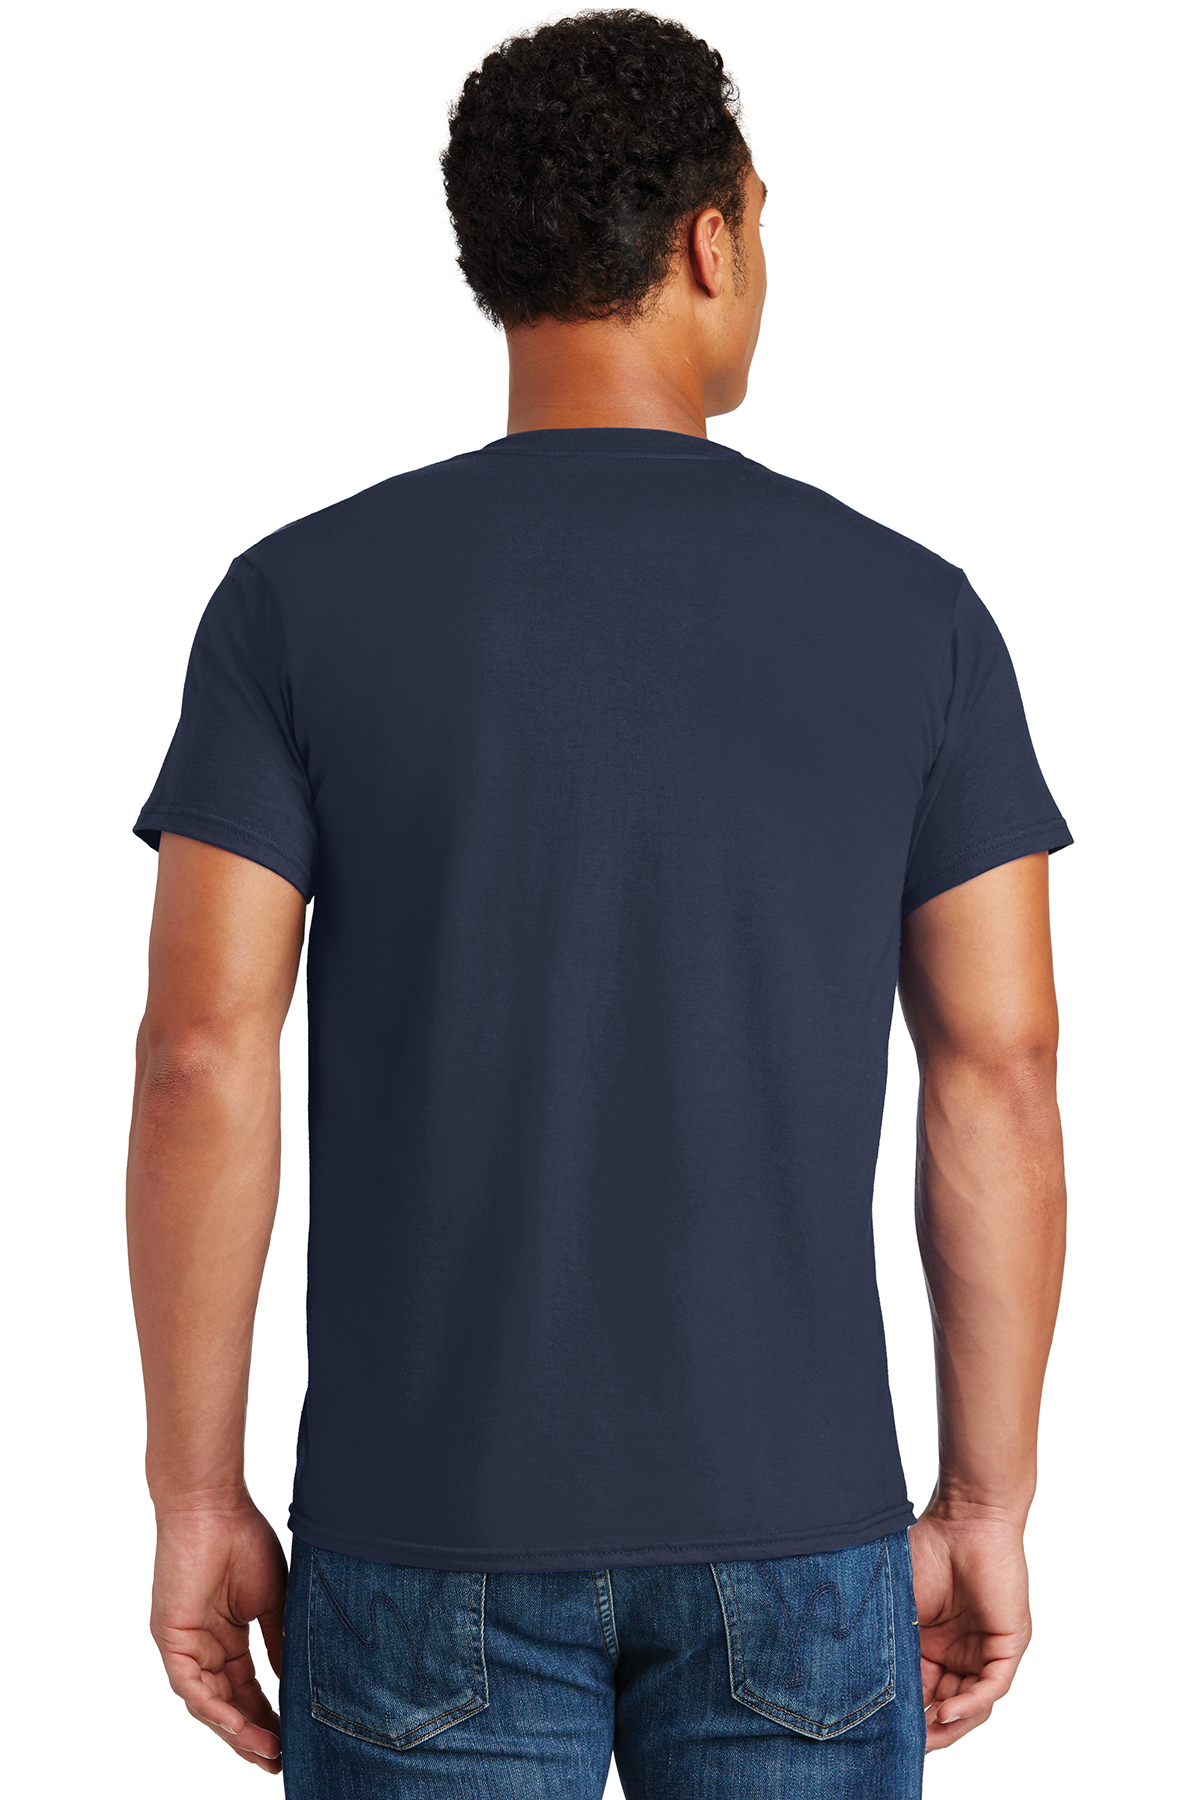 Hanes - Perfect-T Cotton T-Shirt | Product | SanMar